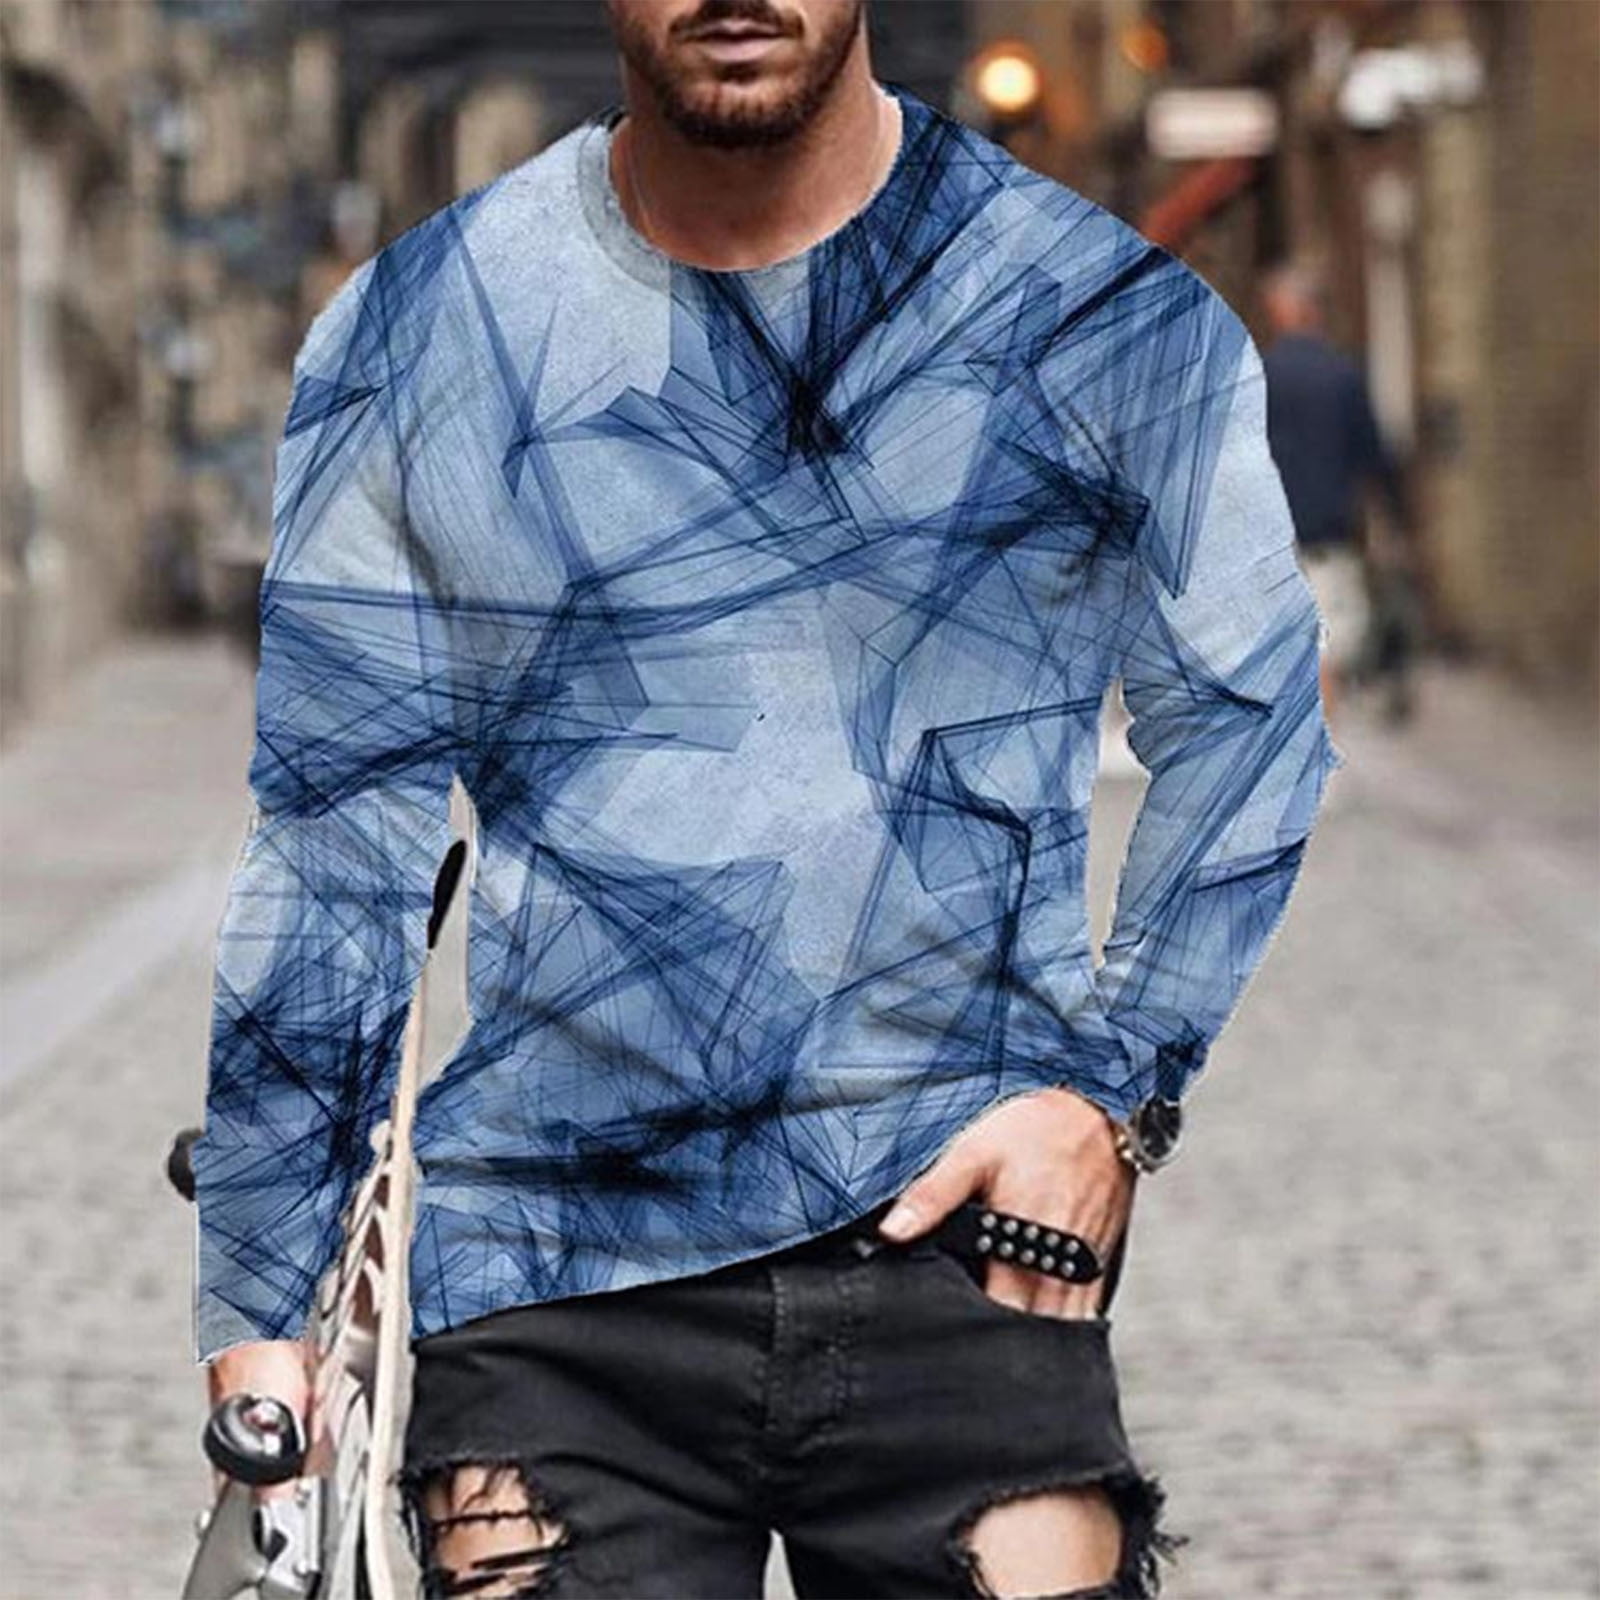 YOTAMI Men's Long Sleeve O-Neck Graphic Fashion Pullover Casual Shirt Tops Blouse Light blue S,M,L,XL,XXL,XXXL,XXXXL,XXXXXL - Walmart.com